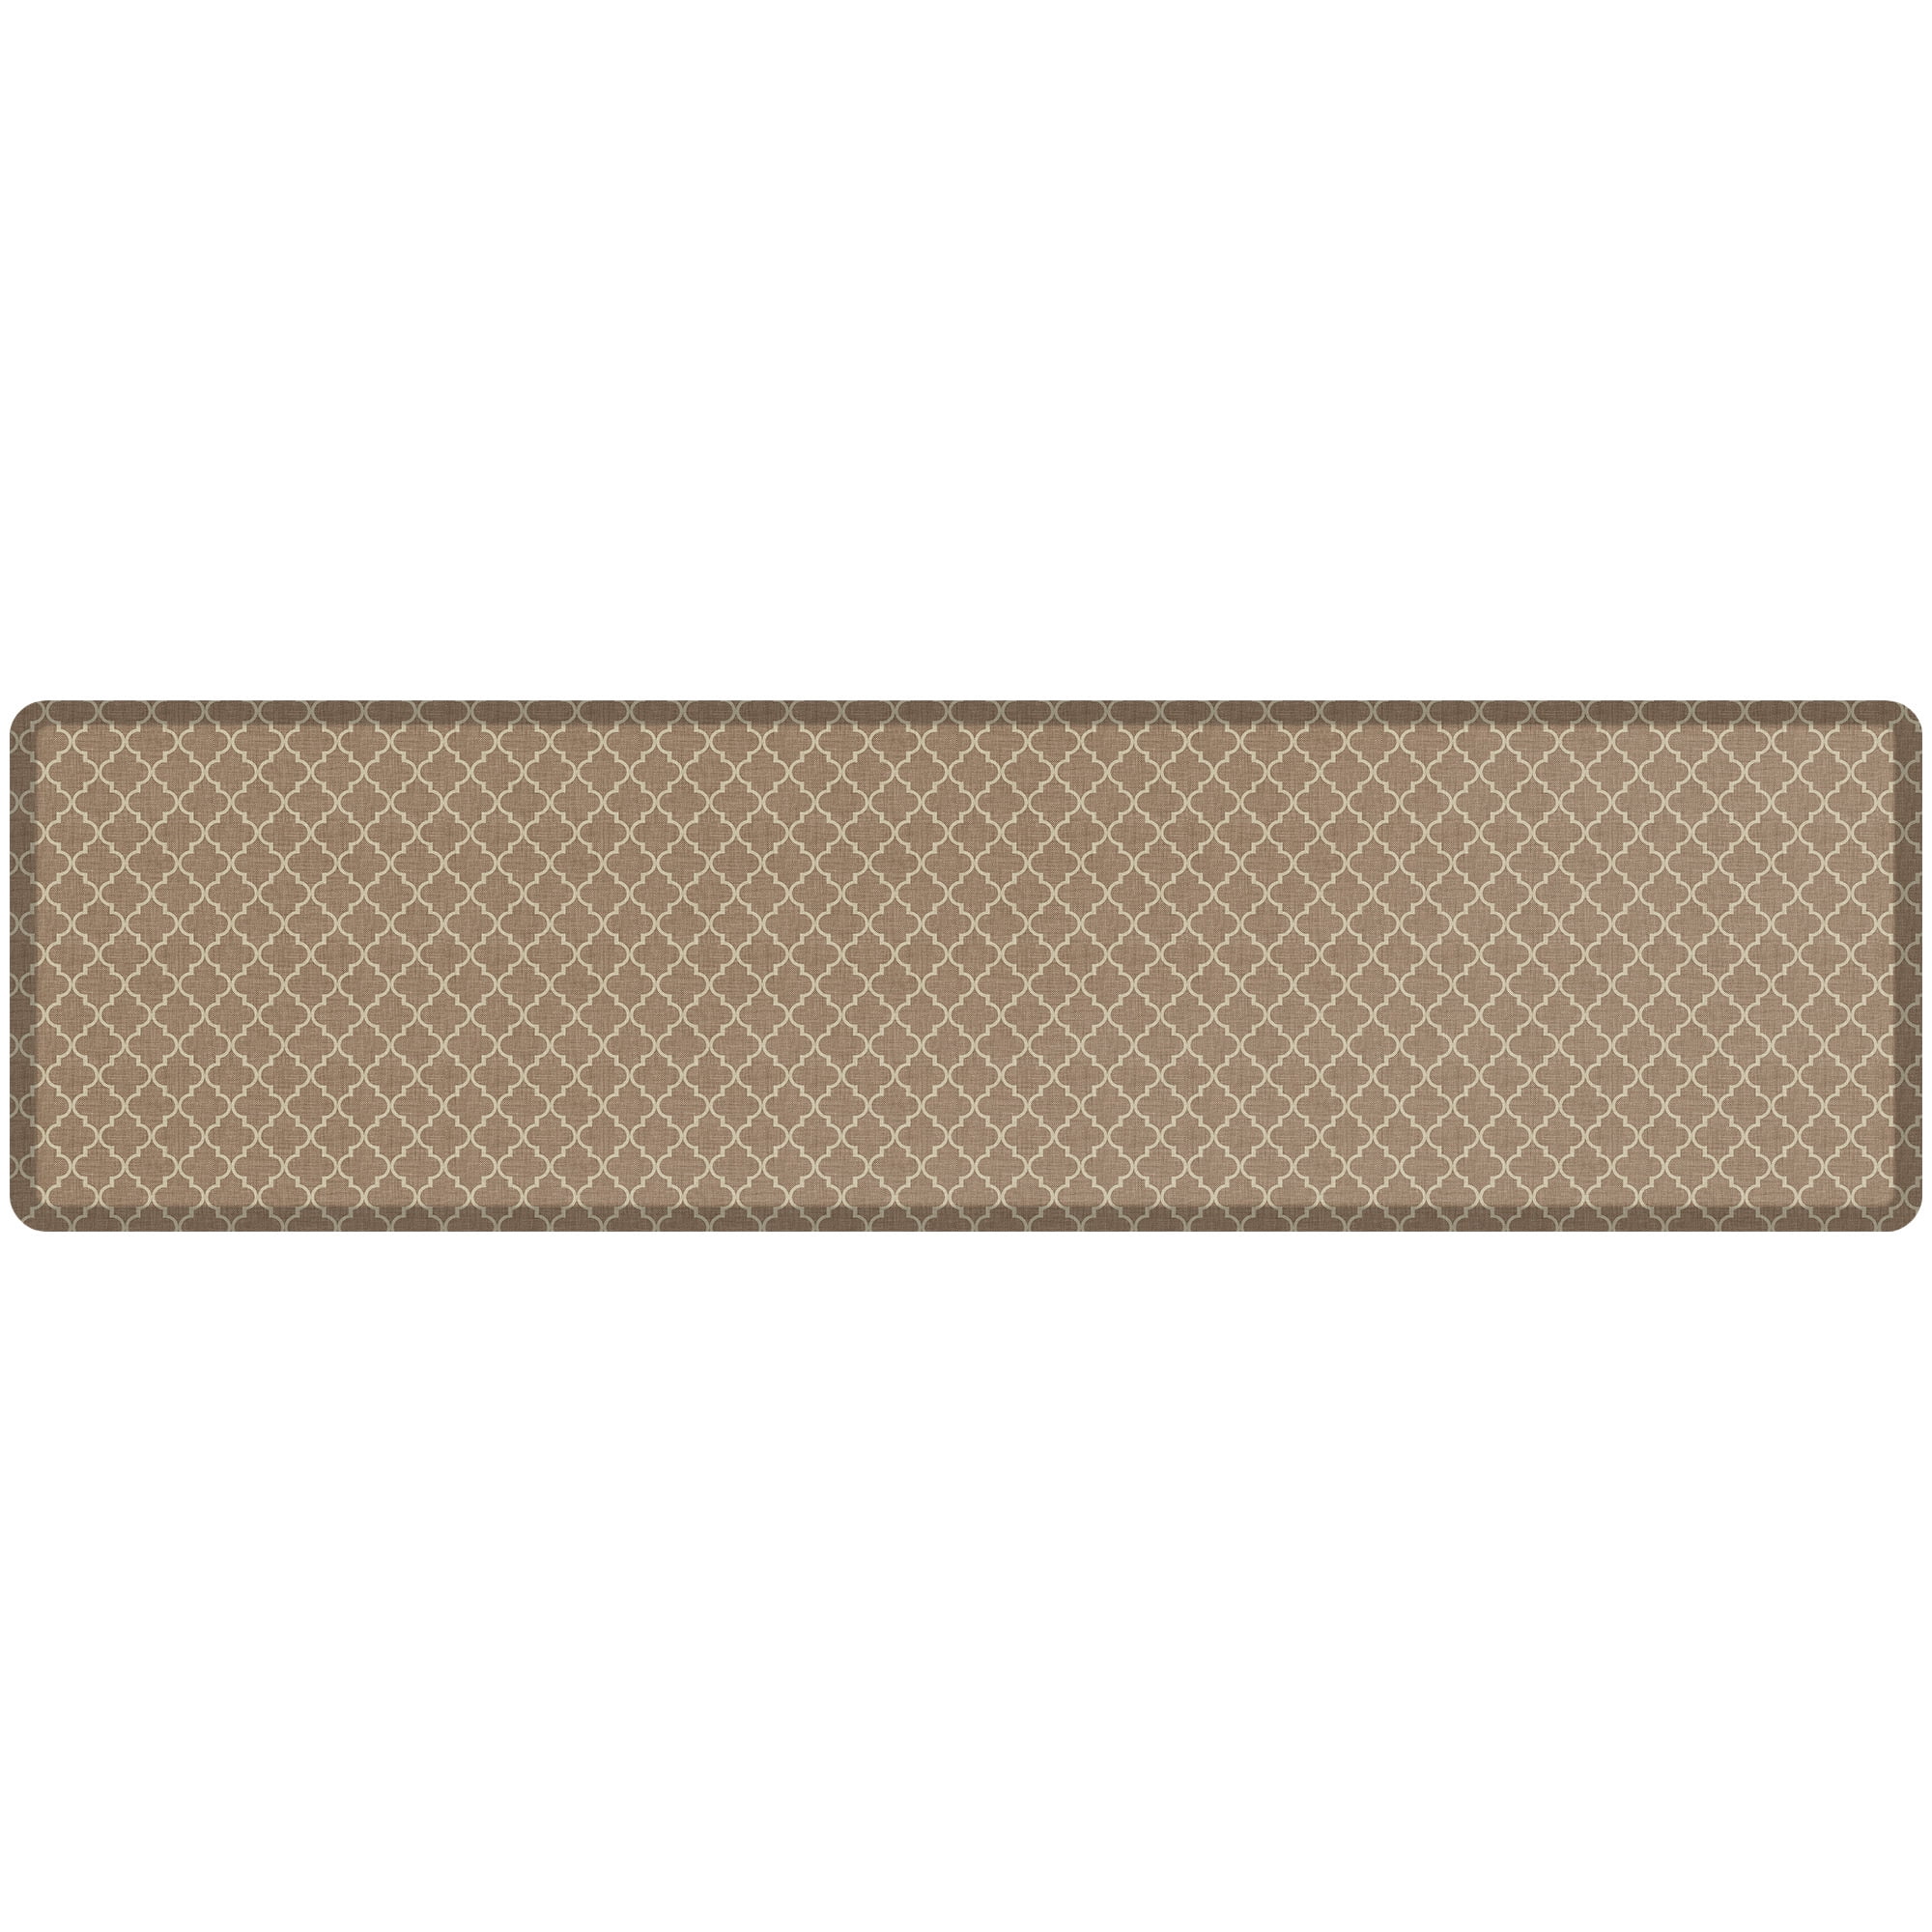 NewLife by GelPro Designer Comfort Mat Lattice Tan 20 by 48-Inch 